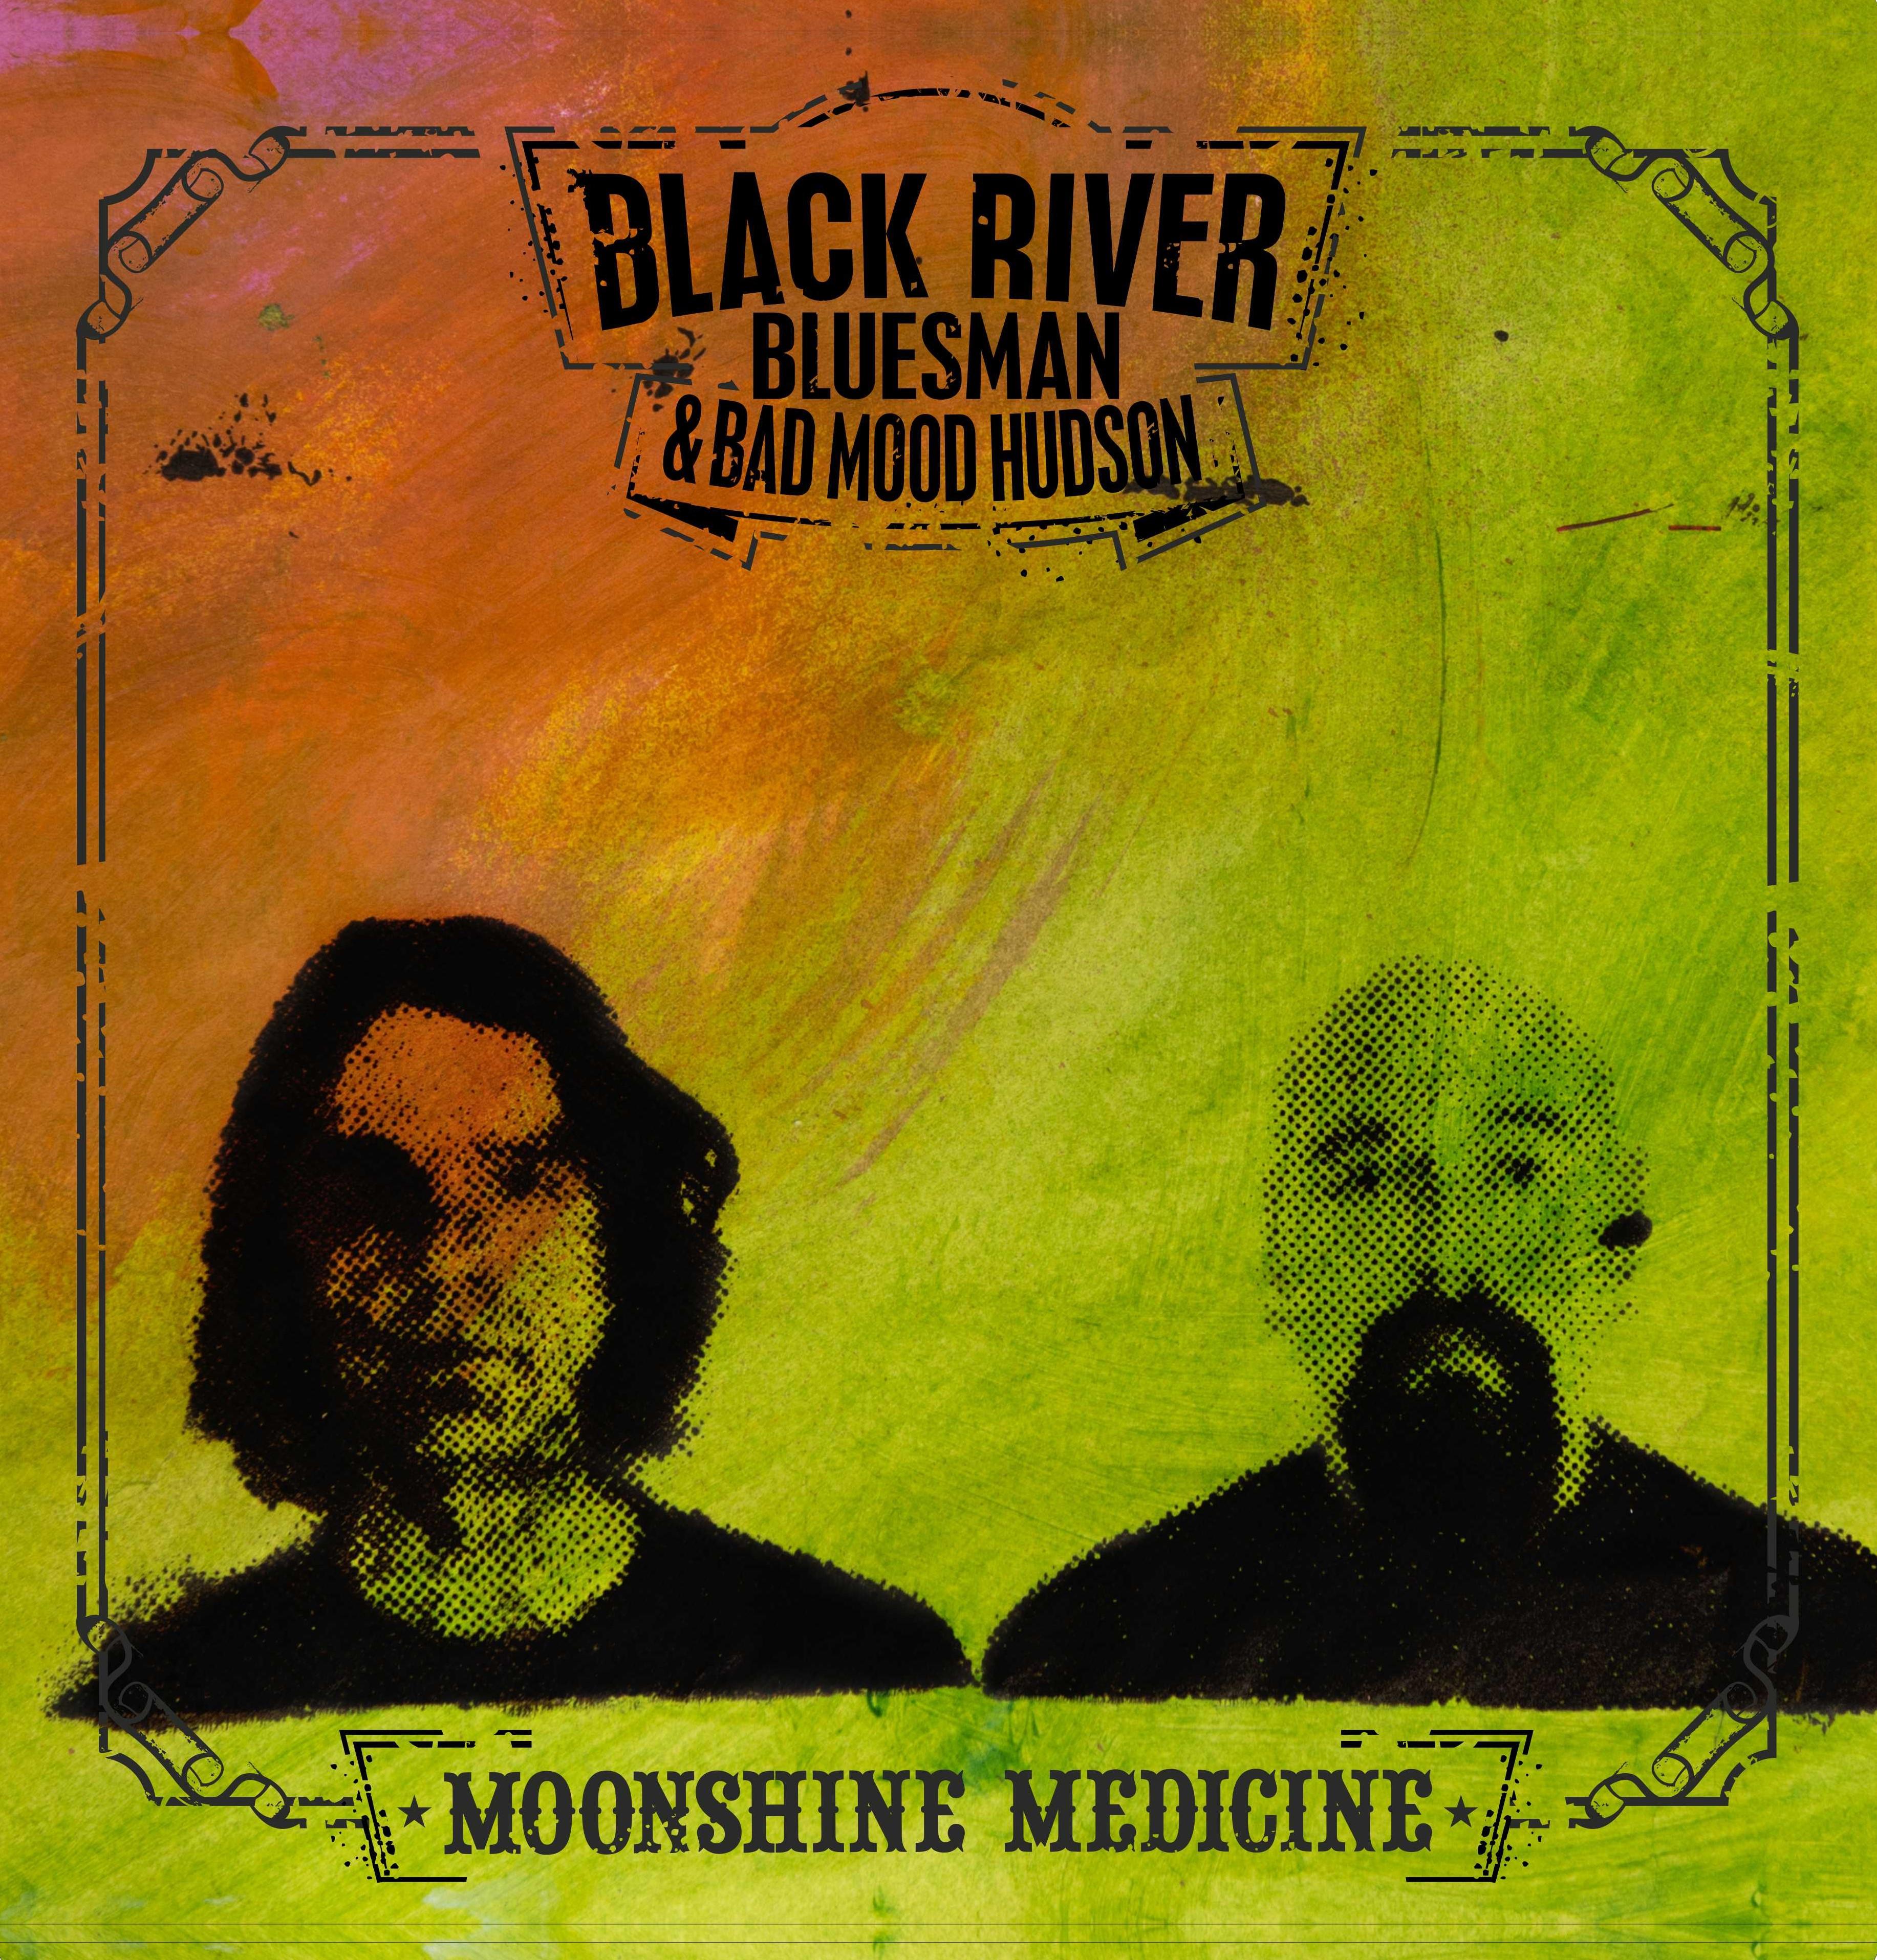 Black River Bluesman & Bad Mood Hudson - Moon MediCINE (2016) LP